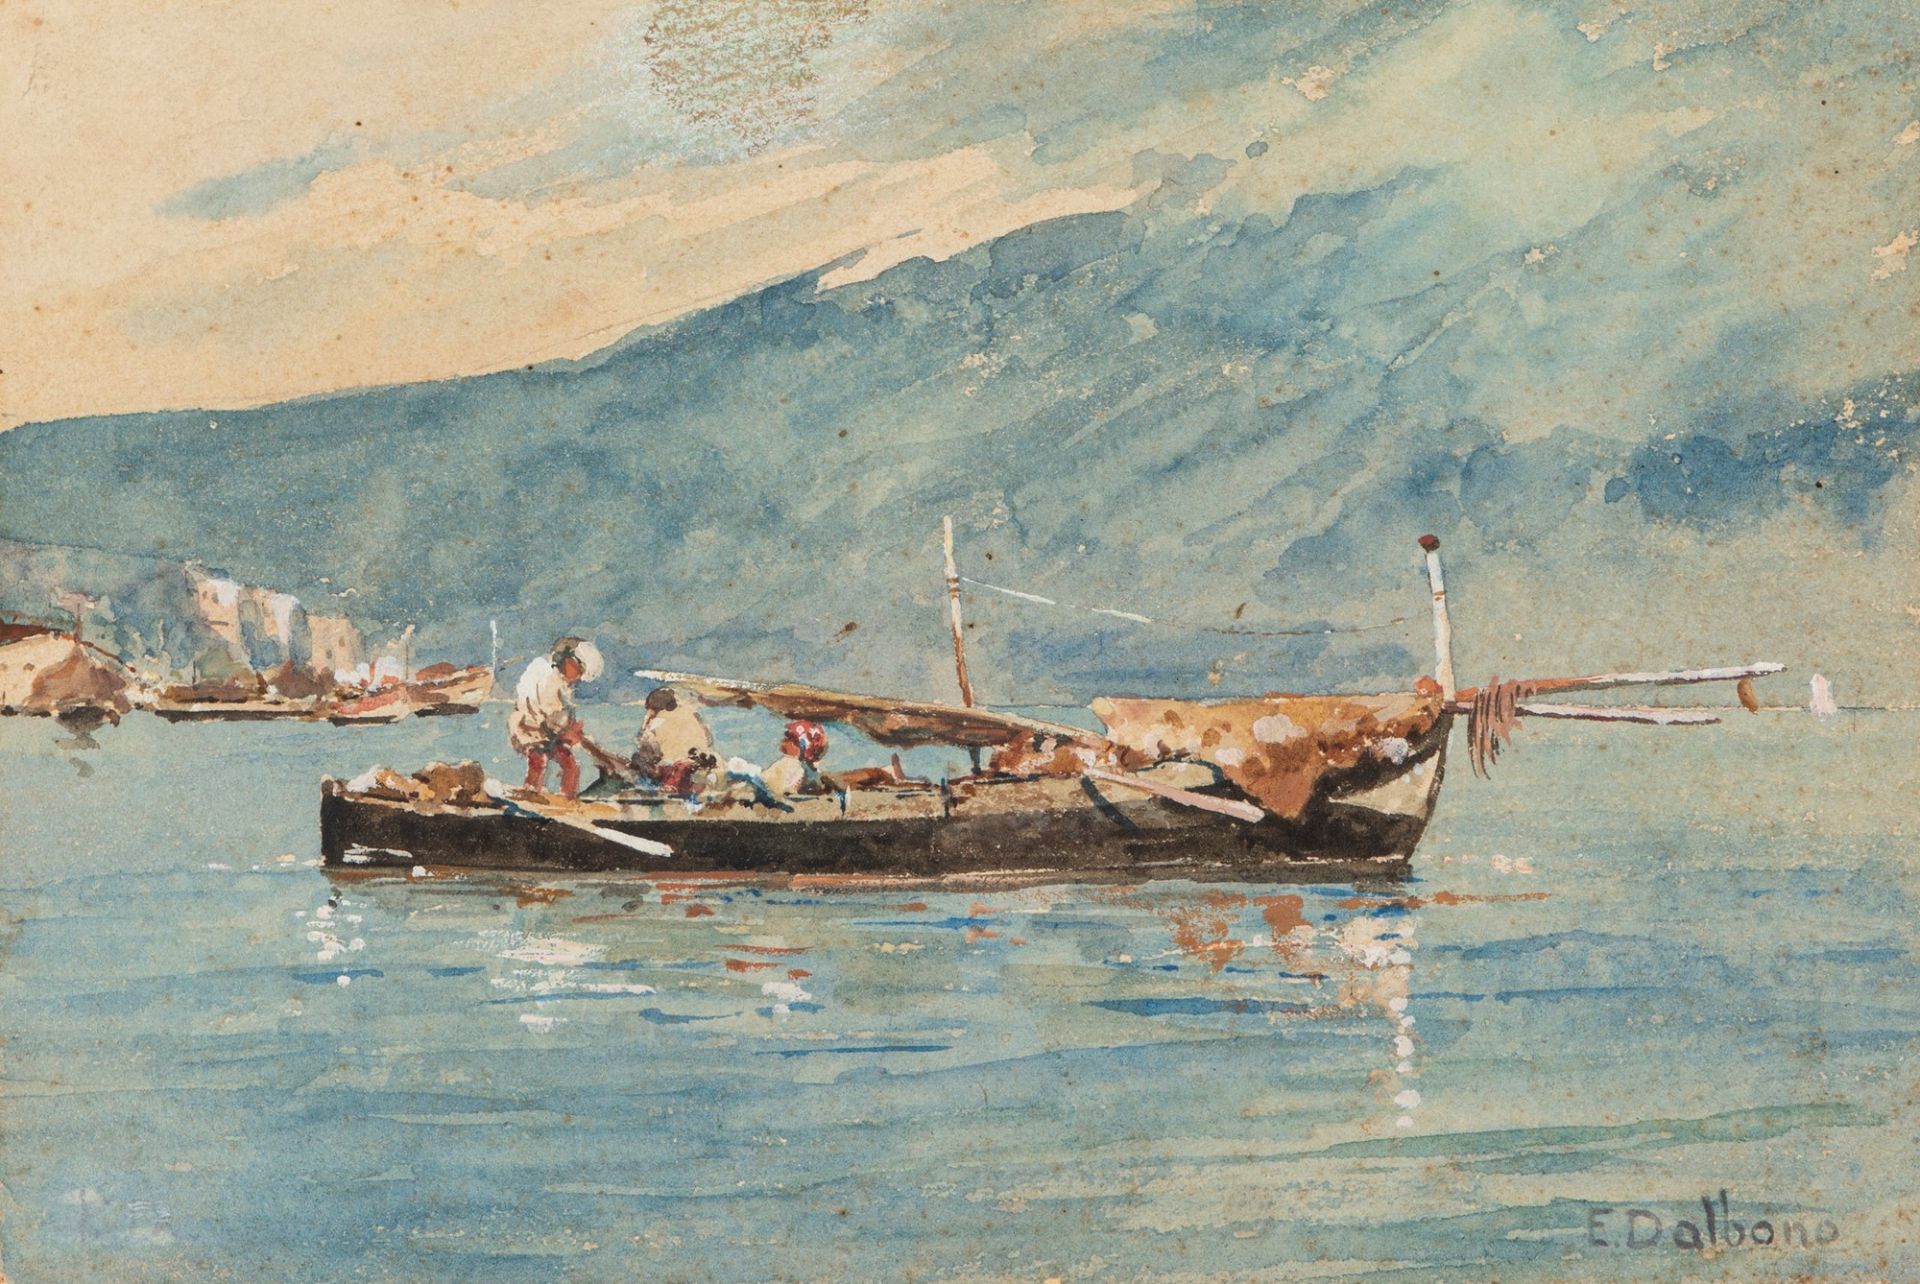 Edoardo Dalbono (Napoli 1841-1915) - Gulf with fishermen